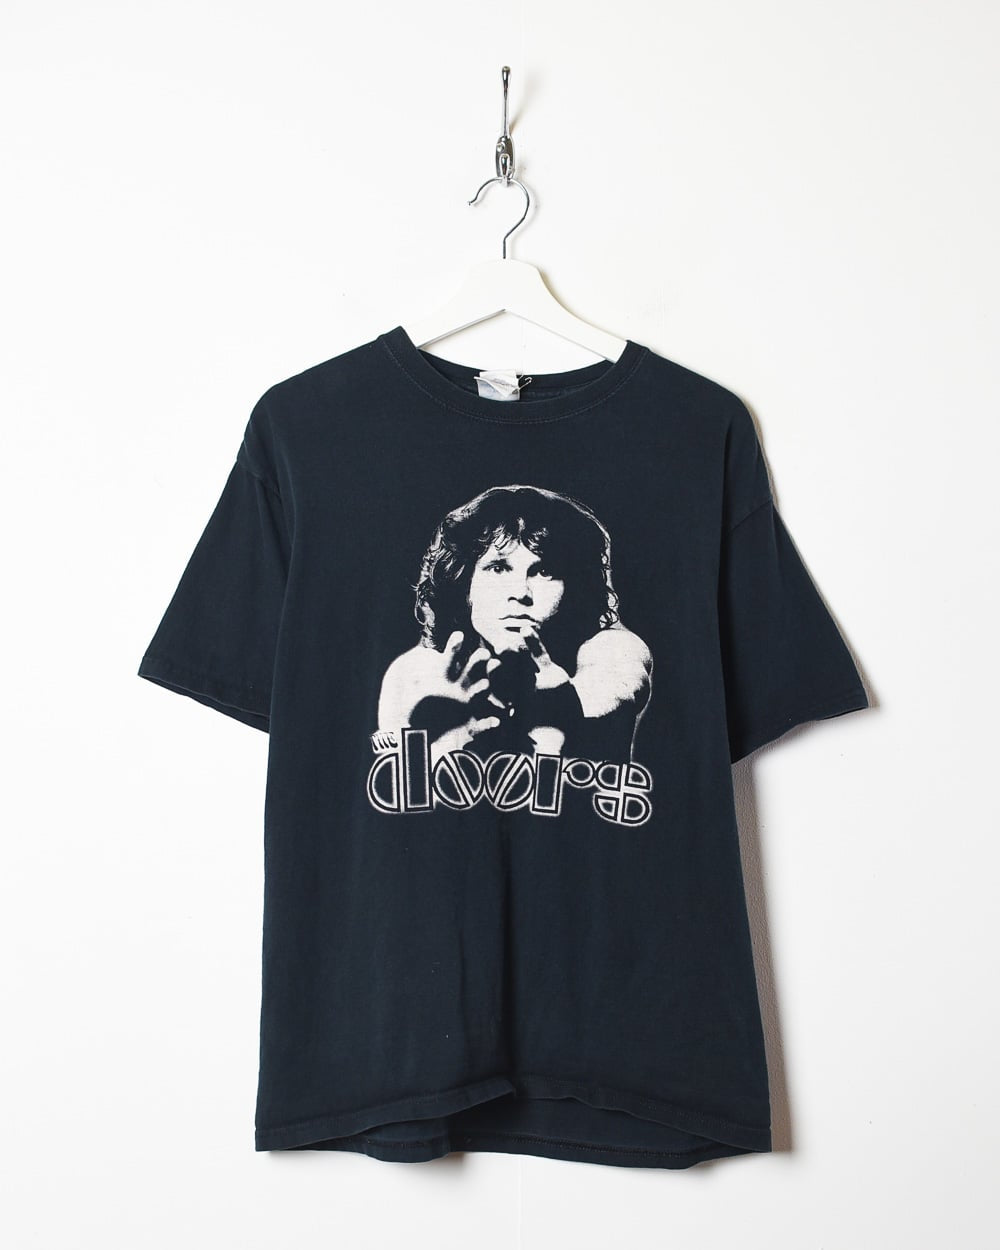 Black The Doors Graphic T-Shirt - Medium